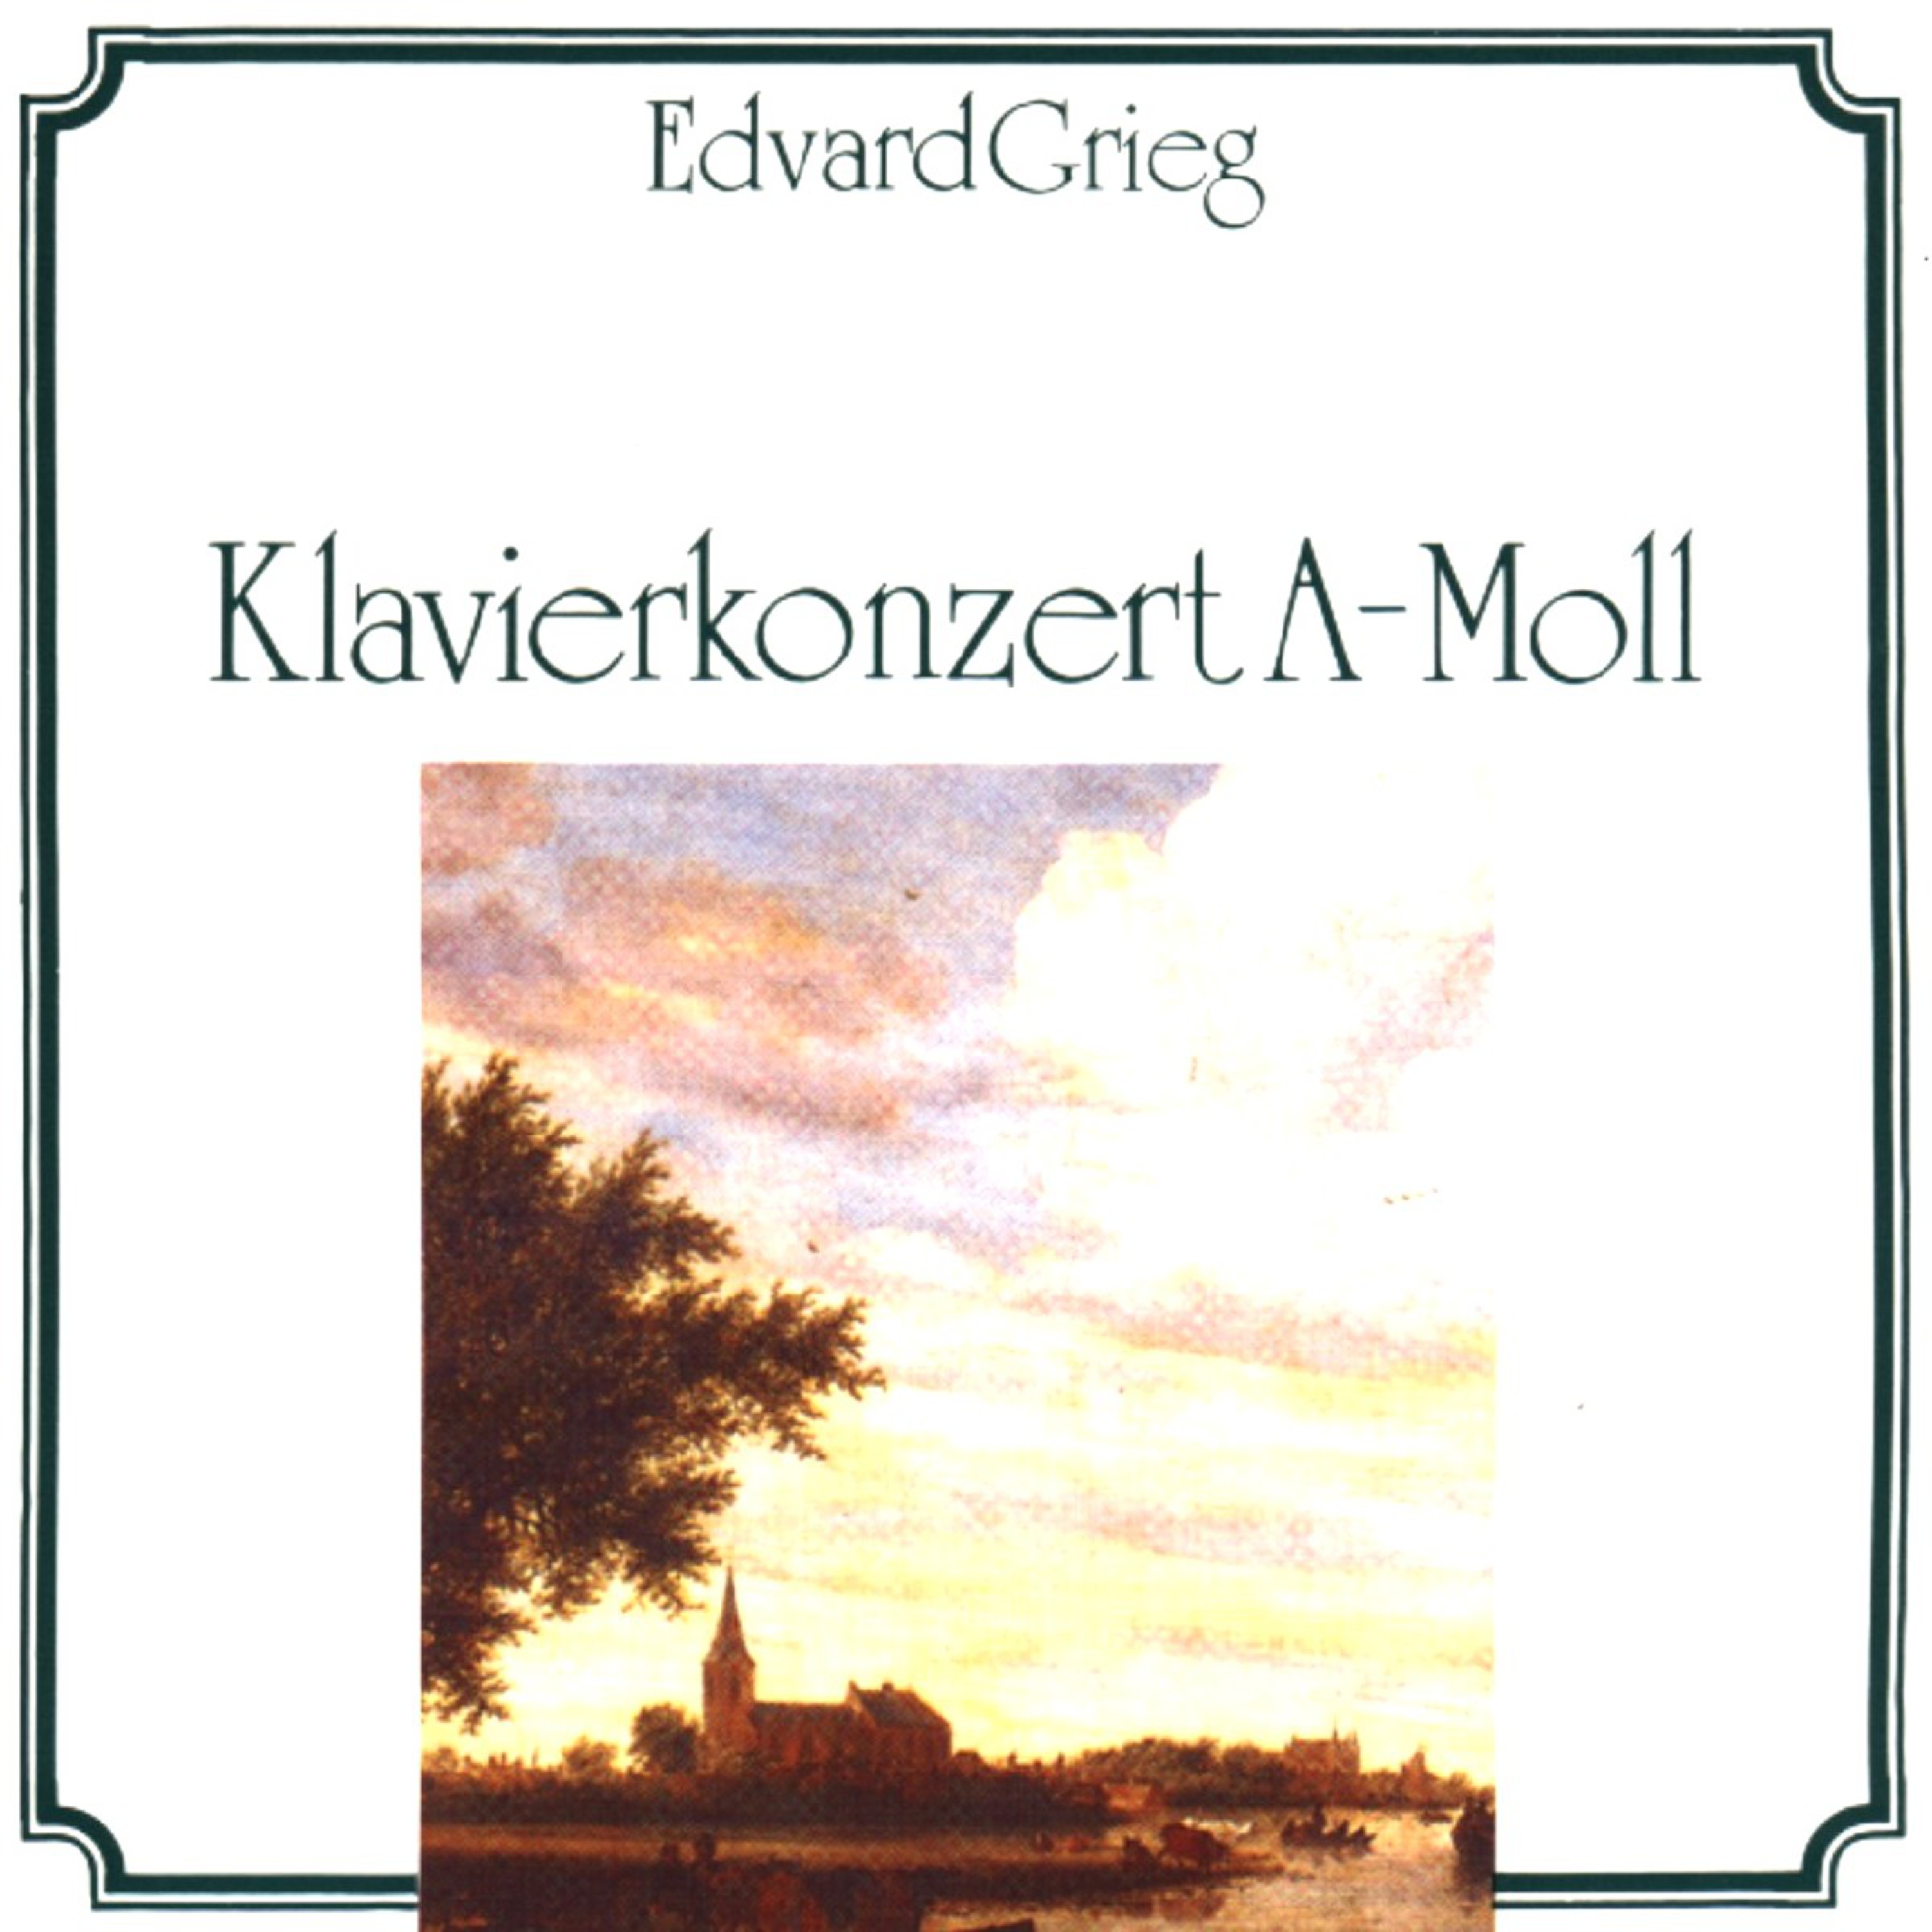 Klavierkonzert A-Moll op. 16 - III. Allegro moderato - Andante maestoso